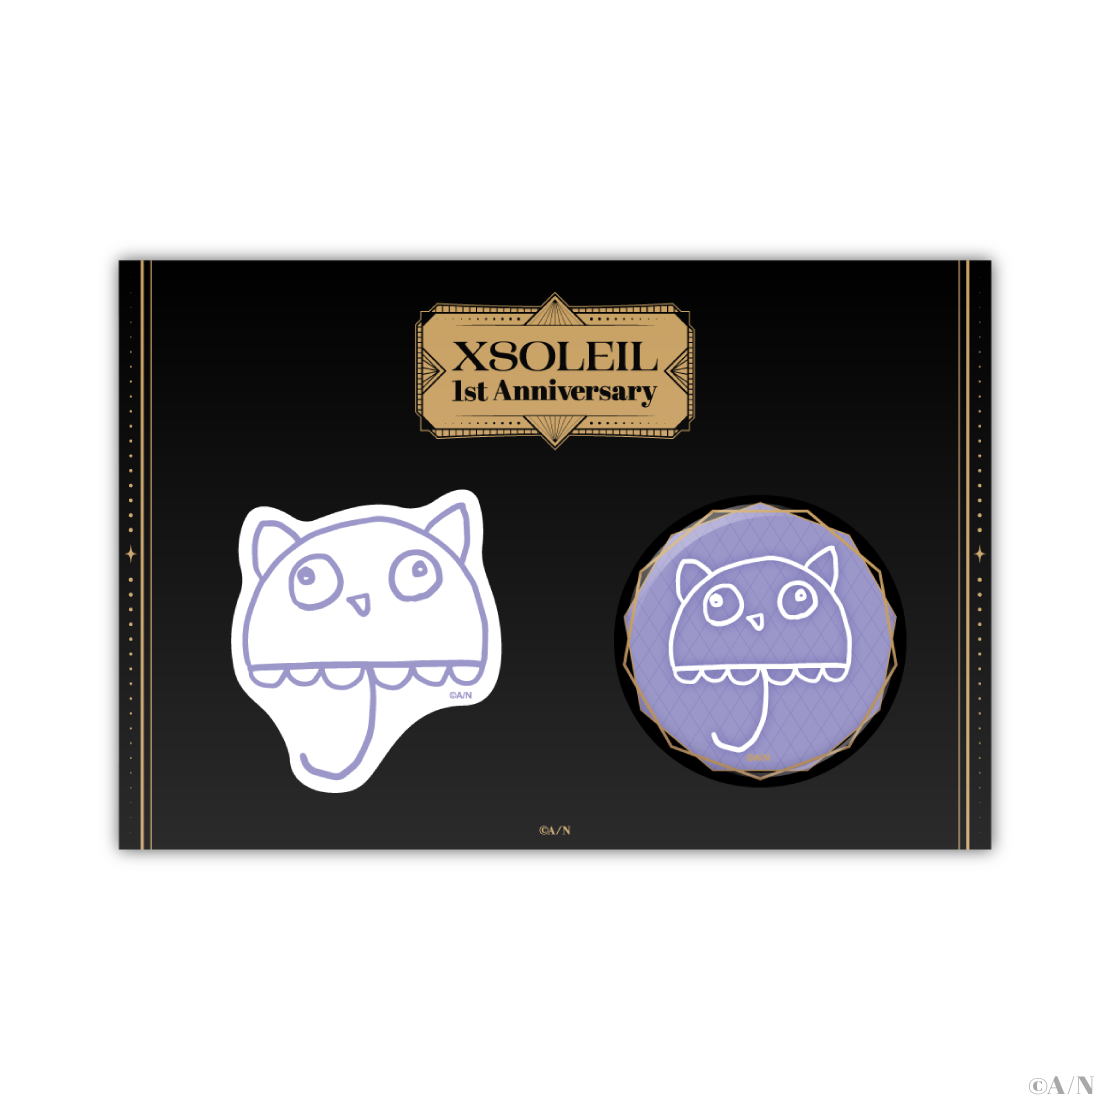 【XSOLEIL 1st Anniversary】缶バッジ&ステッカーセット